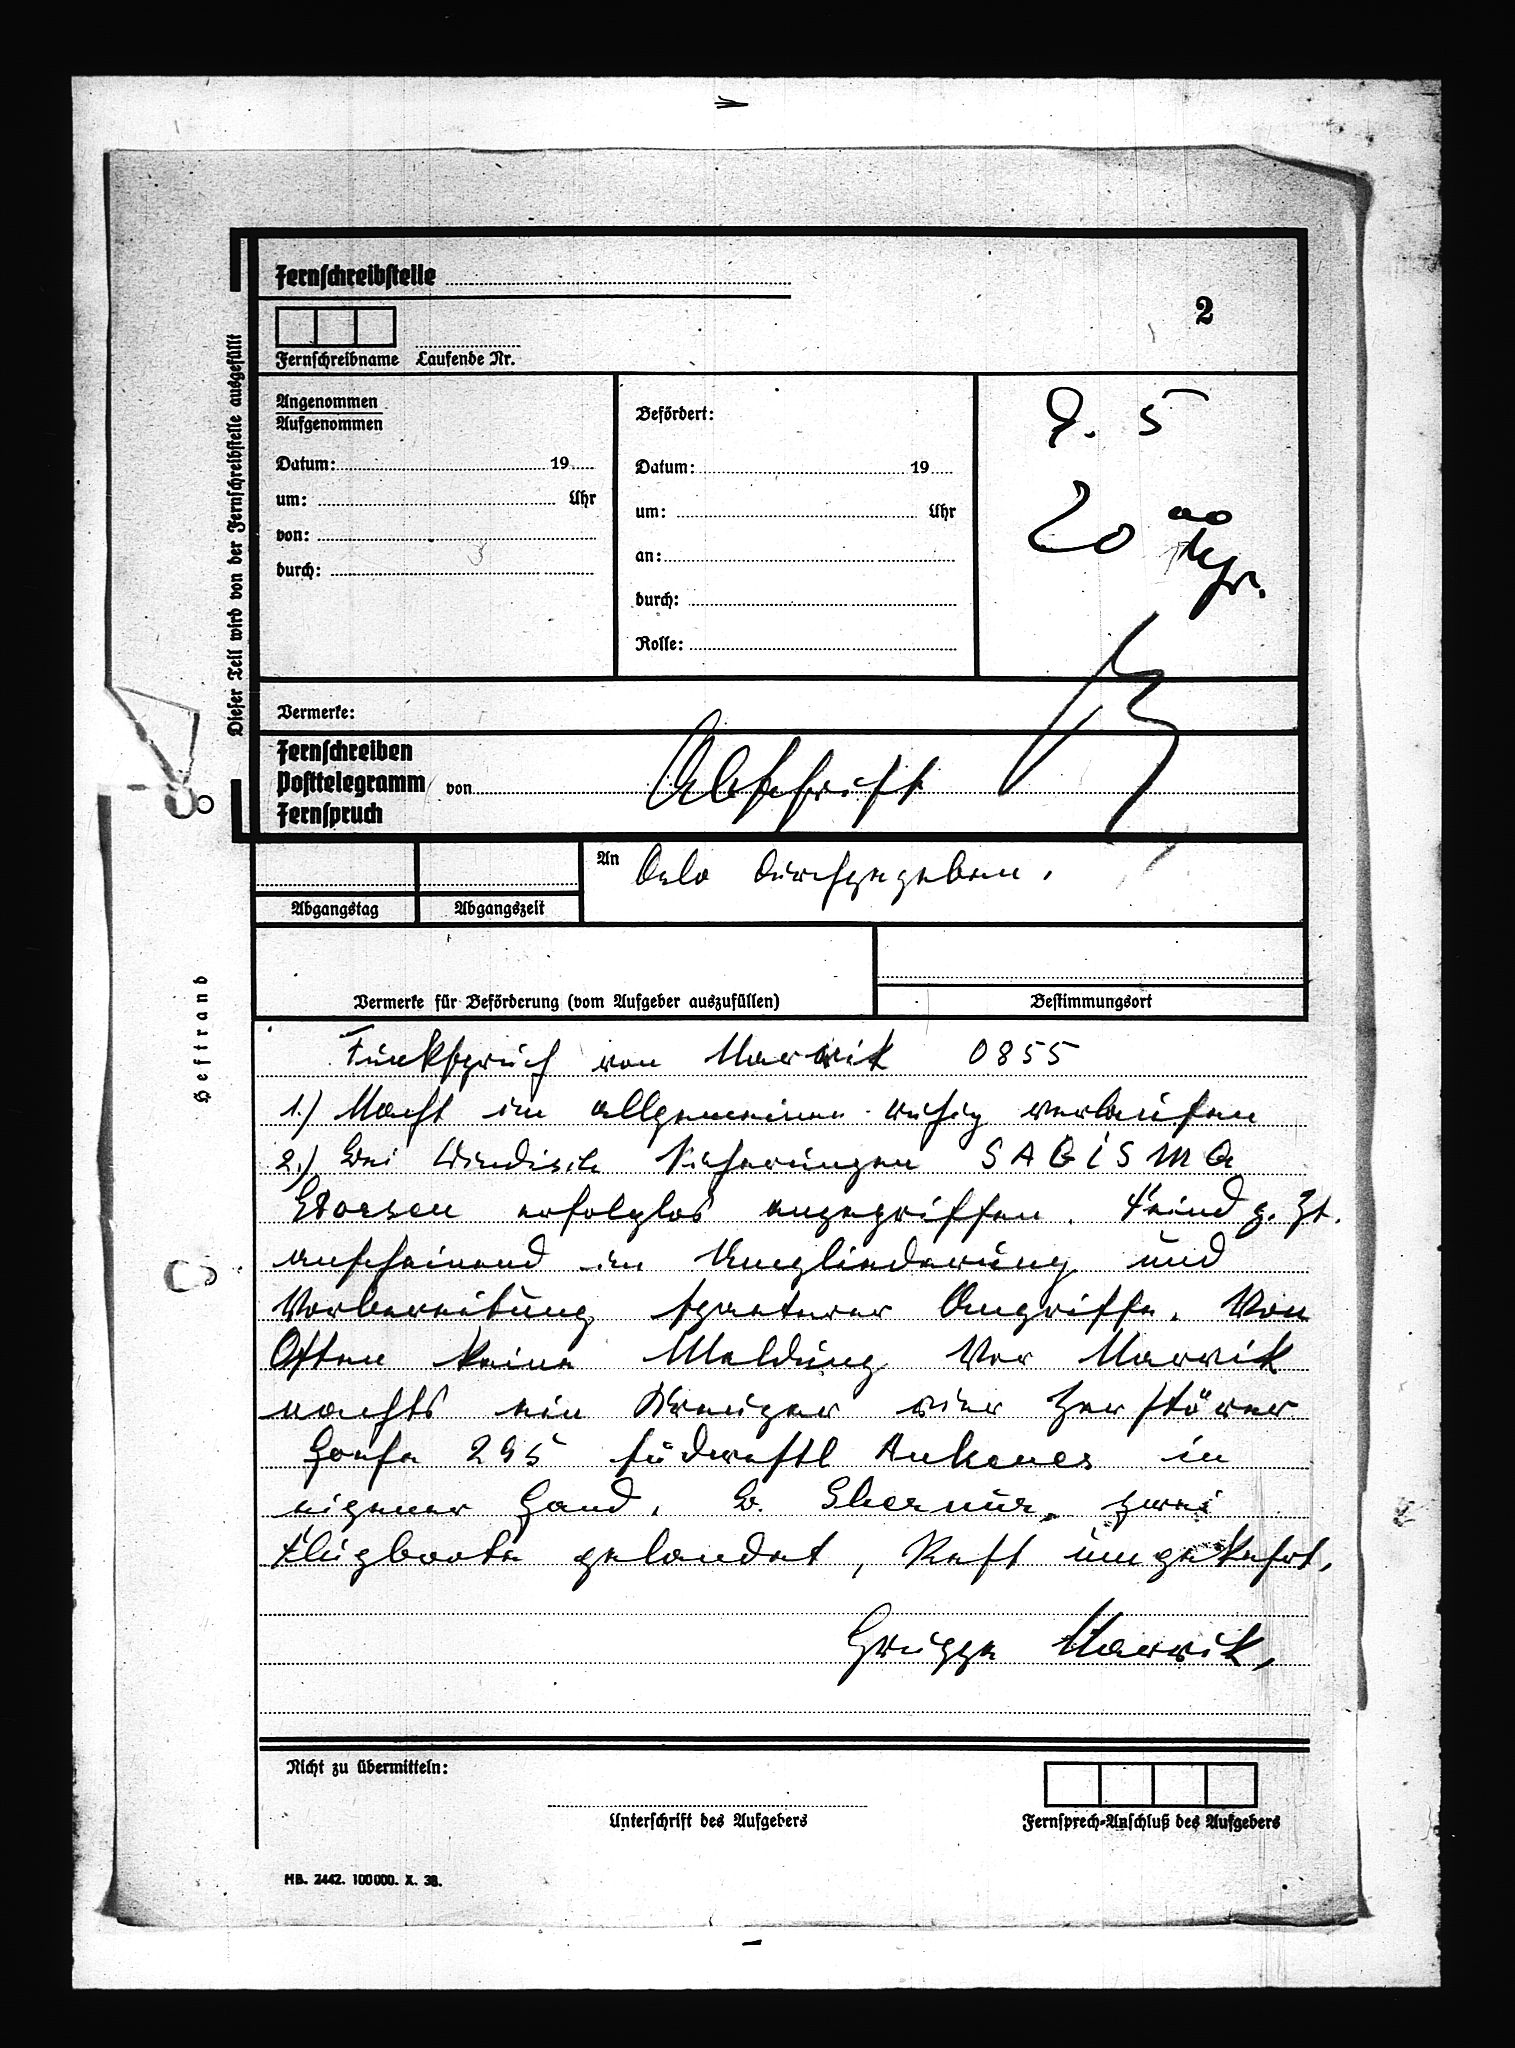 Documents Section, RA/RAFA-2200/V/L0080: Amerikansk mikrofilm "Captured German Documents".
Box No. 719.  FKA jnr. 619/1954., 1940, s. 150